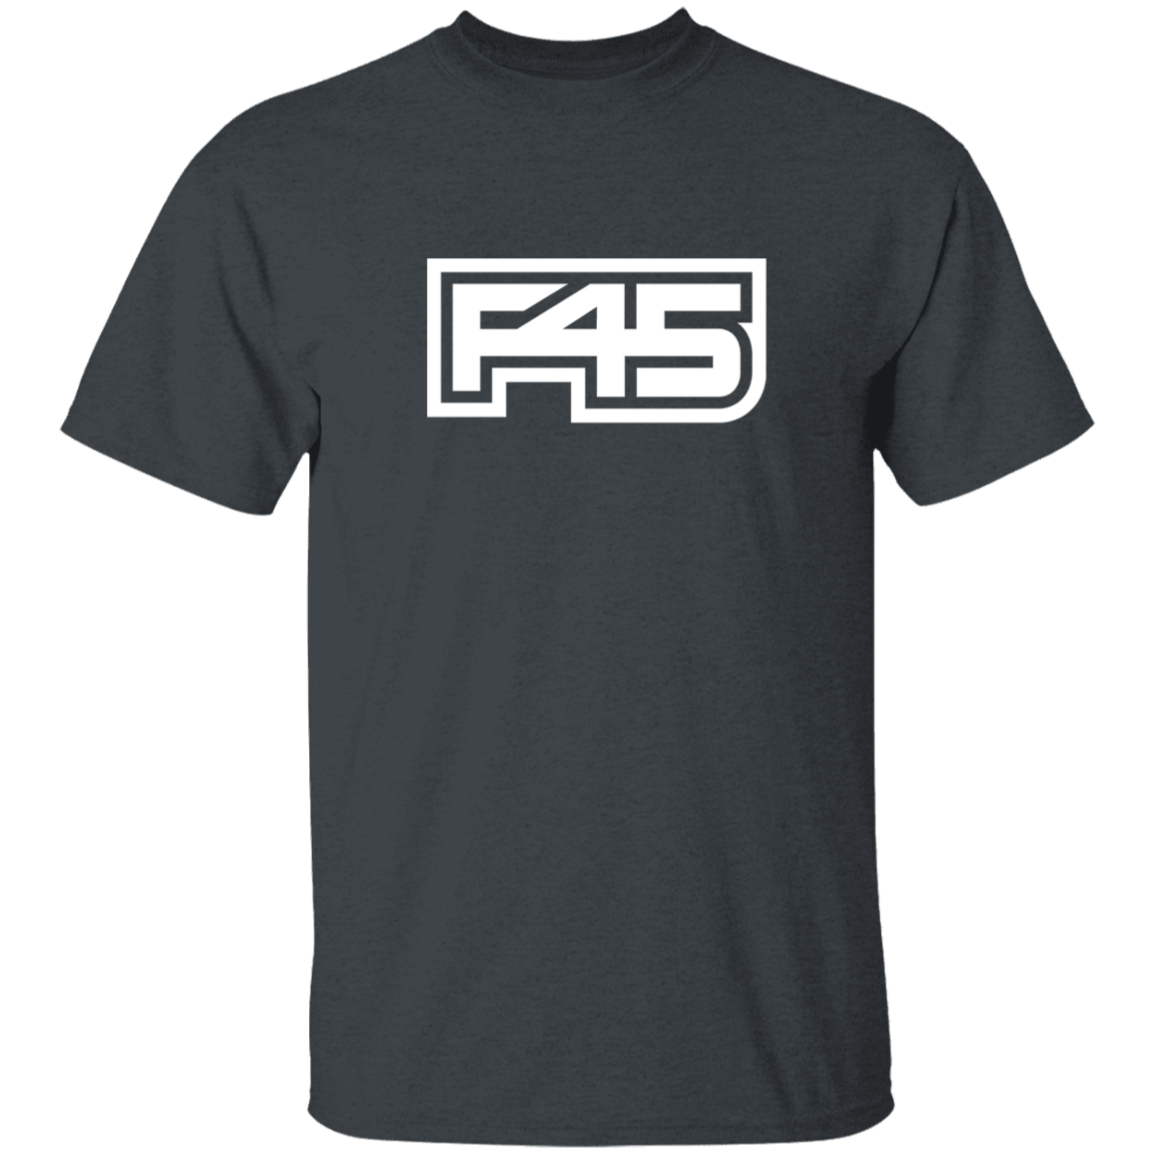 F45 5.3 oz. T-Shirt